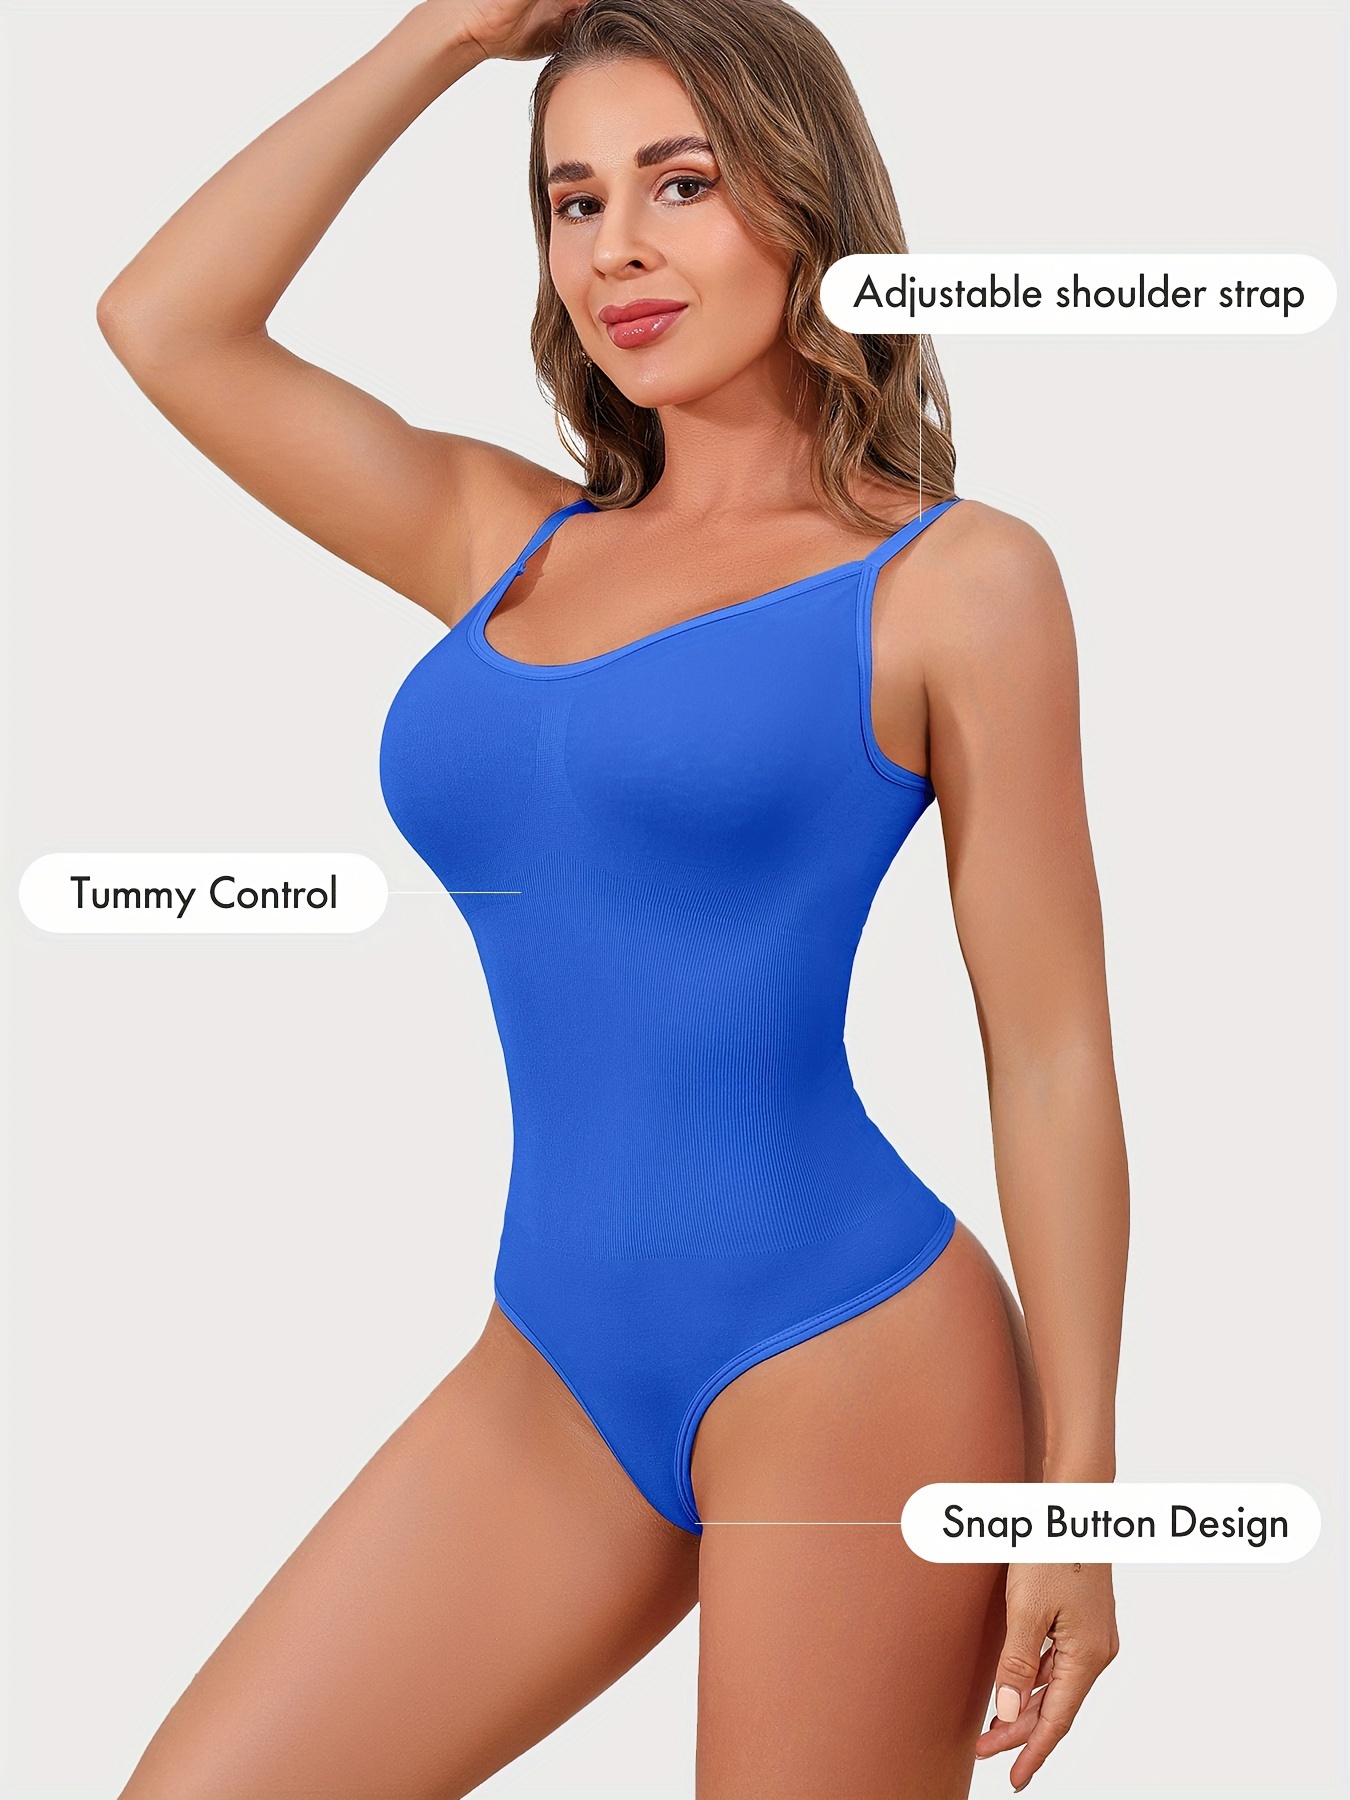 Adjustable Shoulder Strap Slimming Bodysuits Tummy Control Body